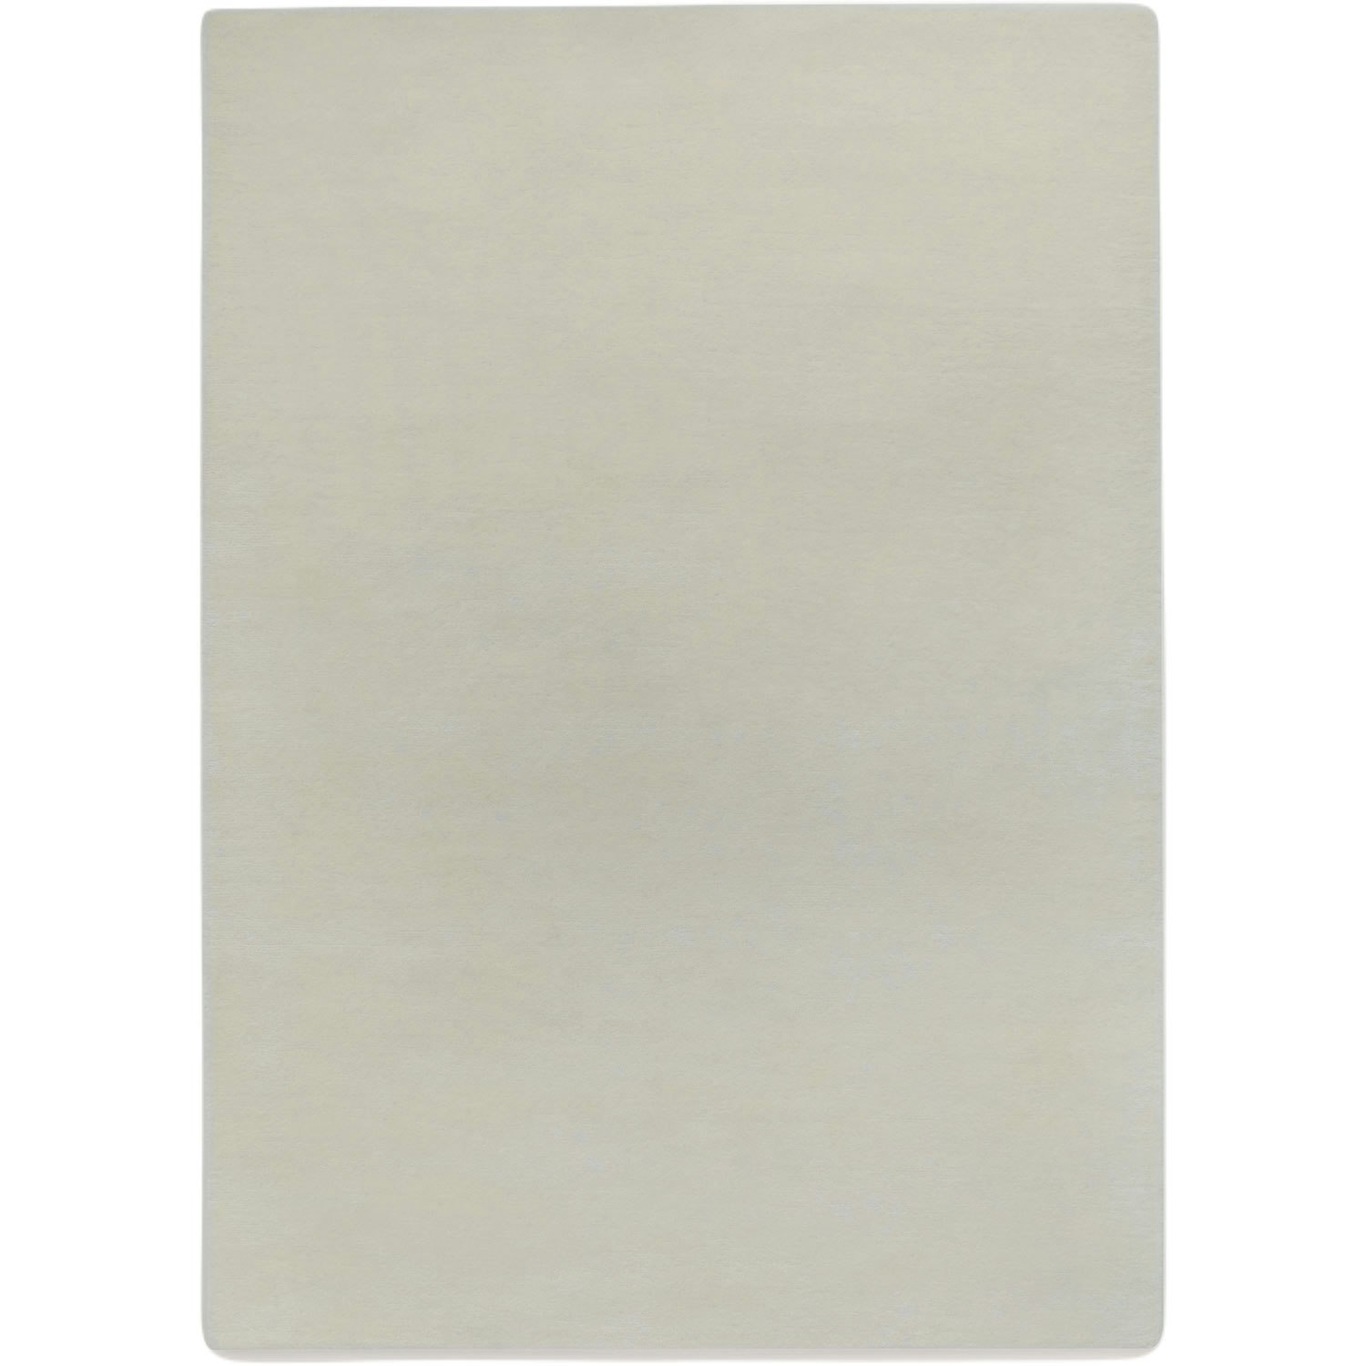 Liljehok Ullteppe Off-white, 300x200 cm